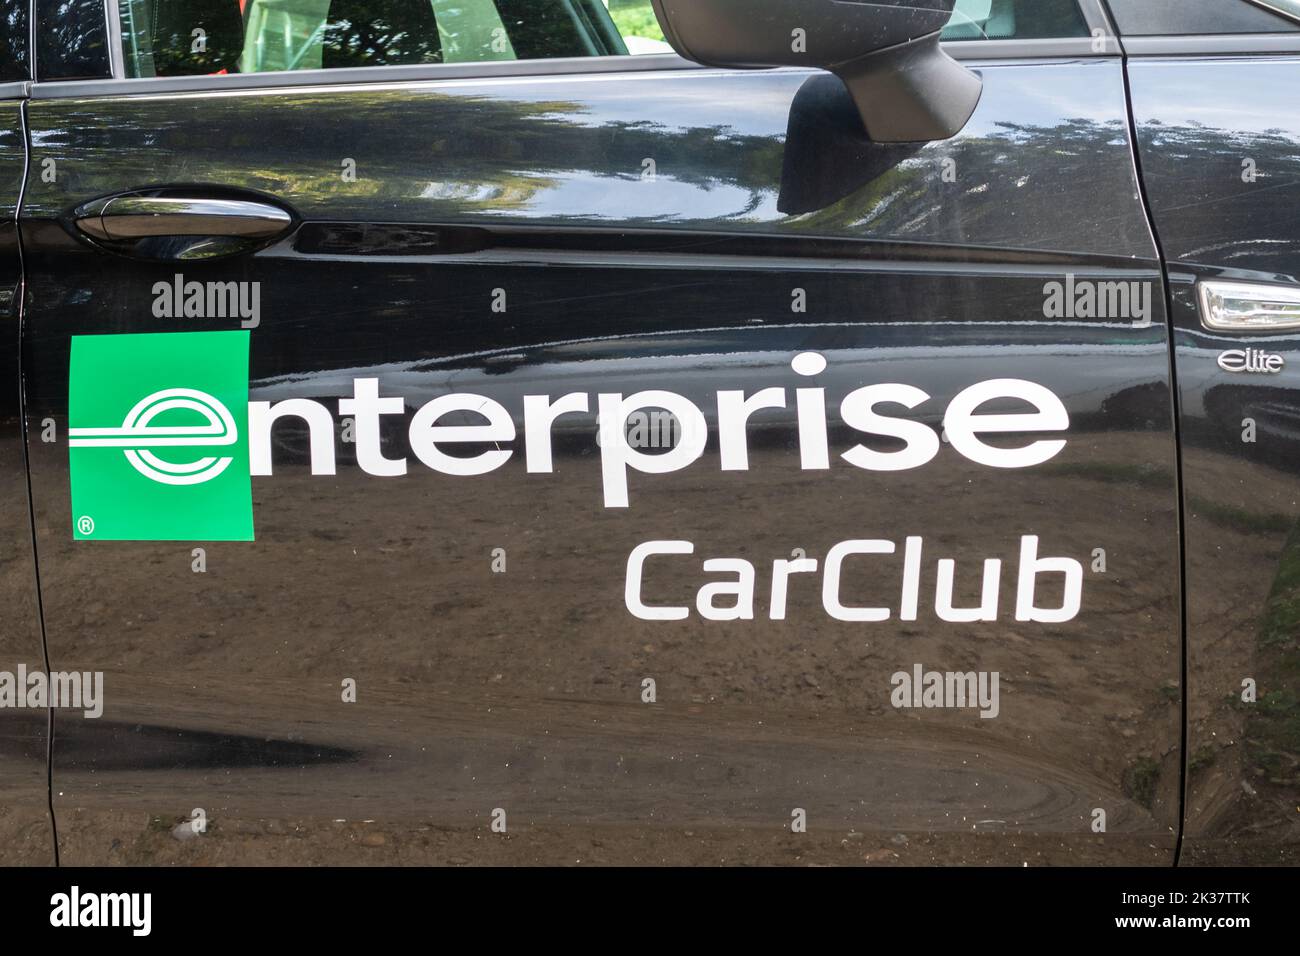 Enterprise car club logo on black vehicle or car, alternative to buying cars Stock Photo